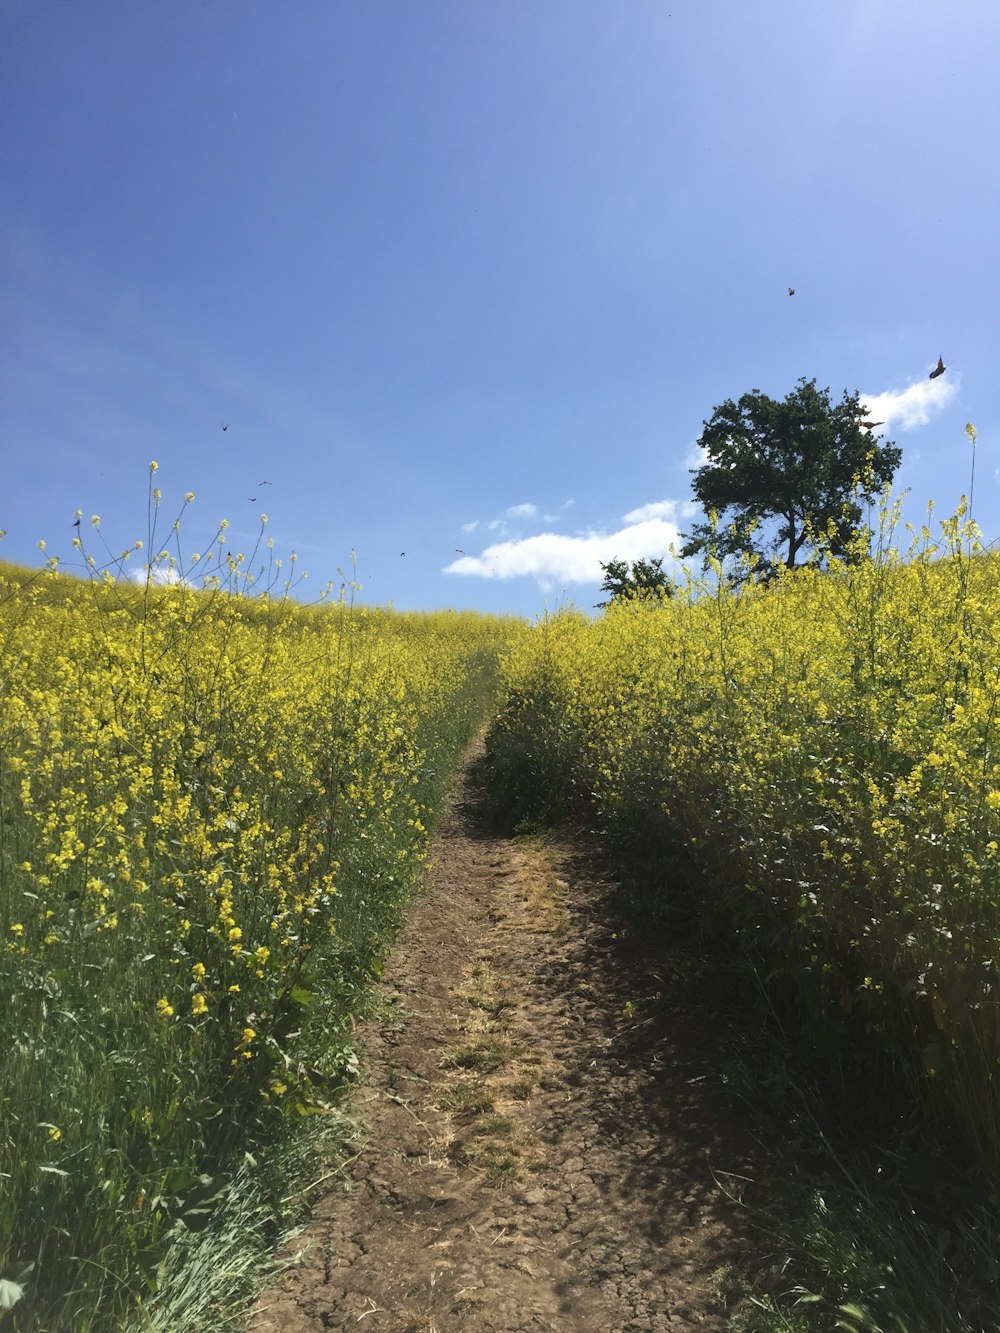 a dirt path through a field of flowers